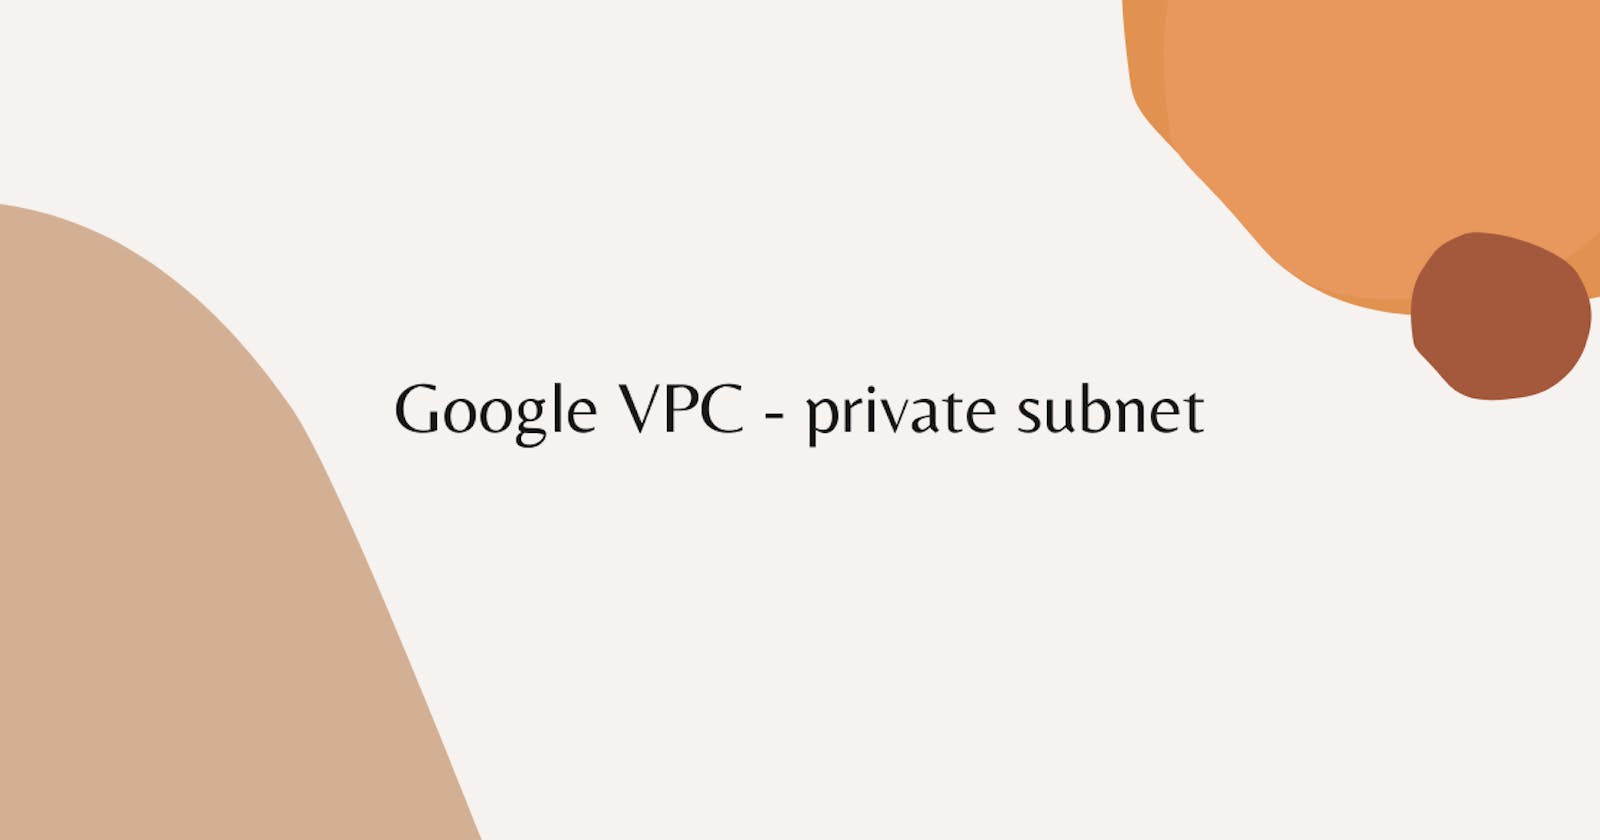 Google VPC - private subnet